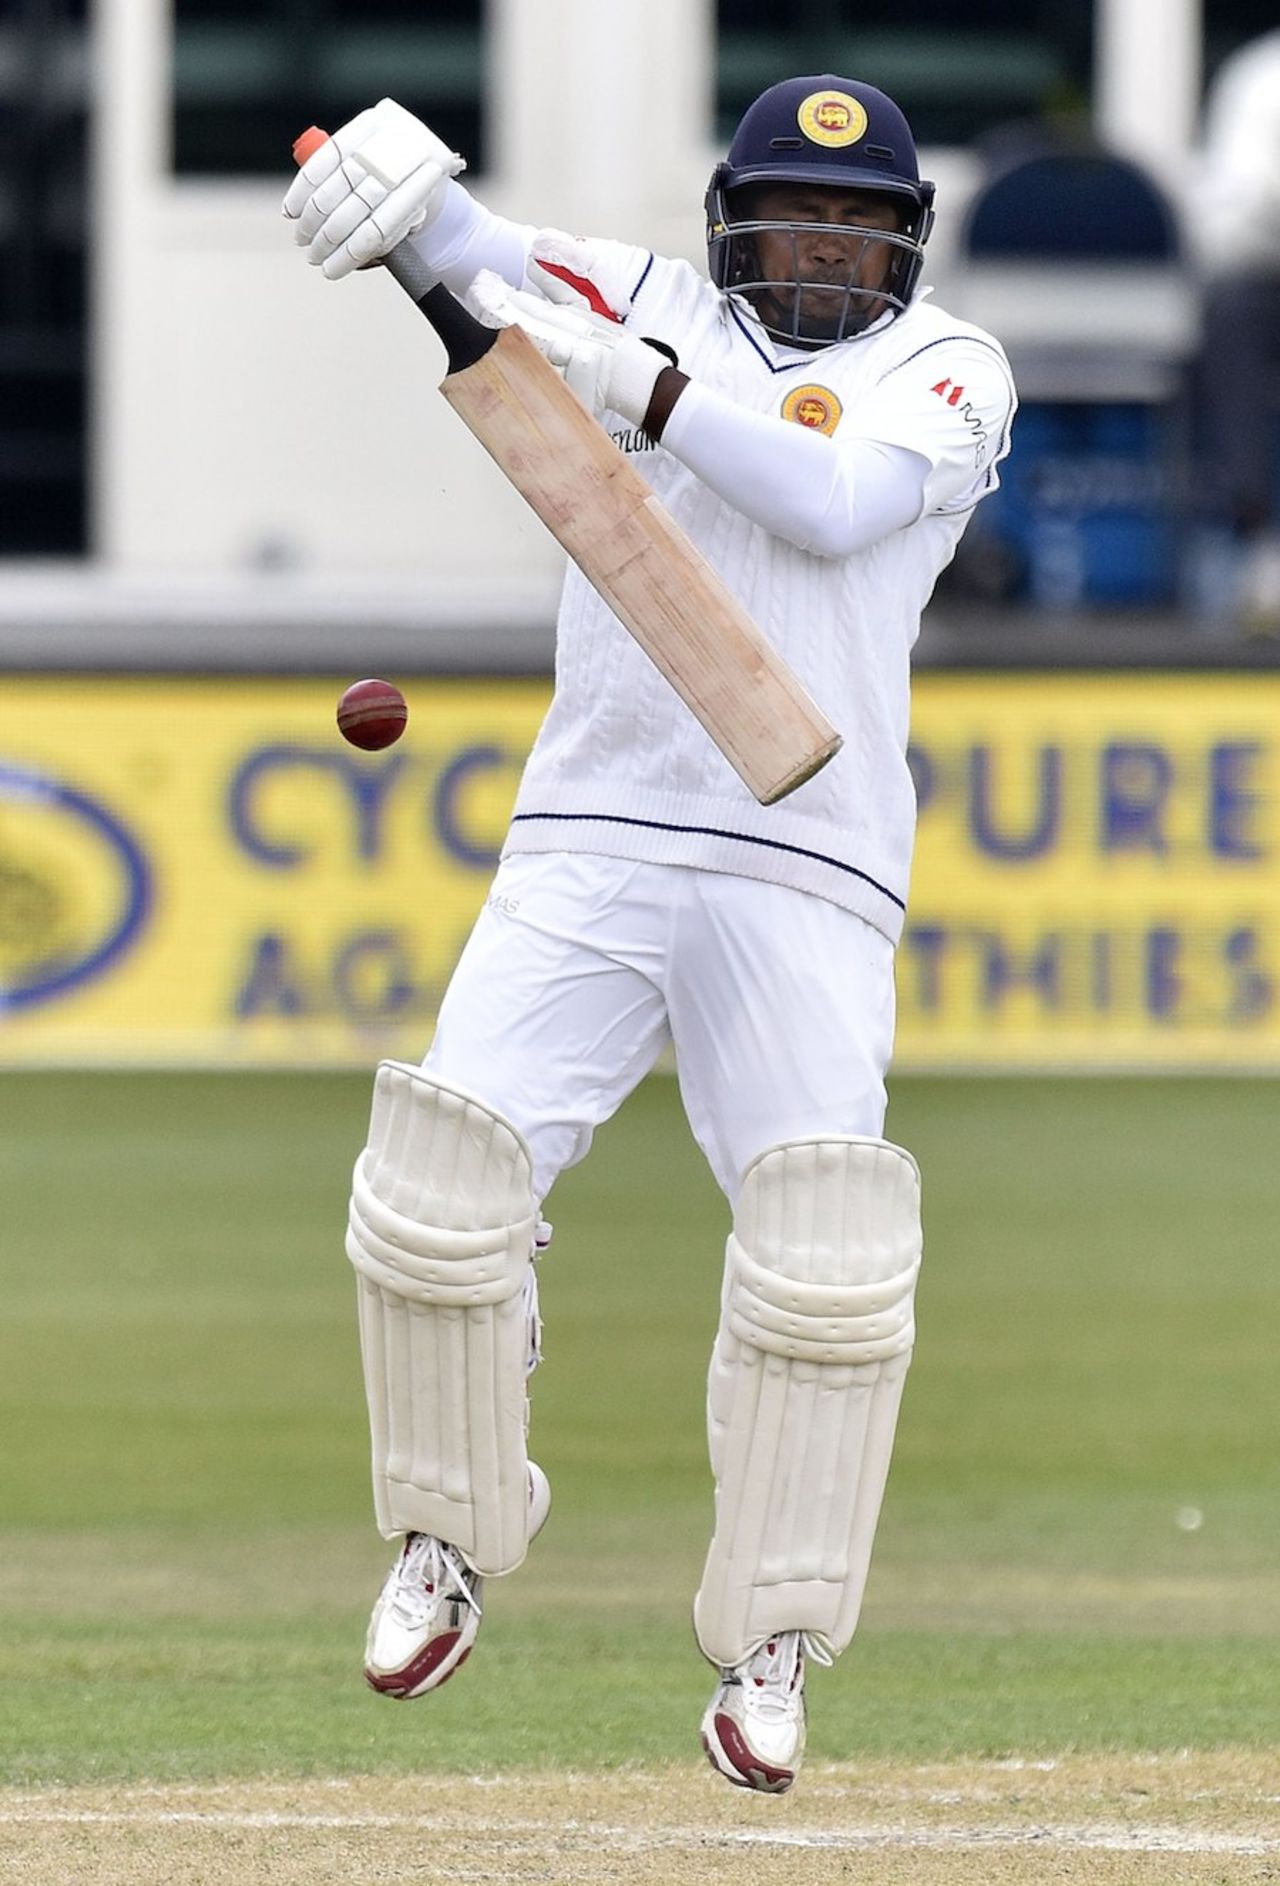 Rangana Herath jumps to fend off a short ball, New Zealand v Sri Lanka, 1st Test, Dunedin, 3rd day, December 12, 2015